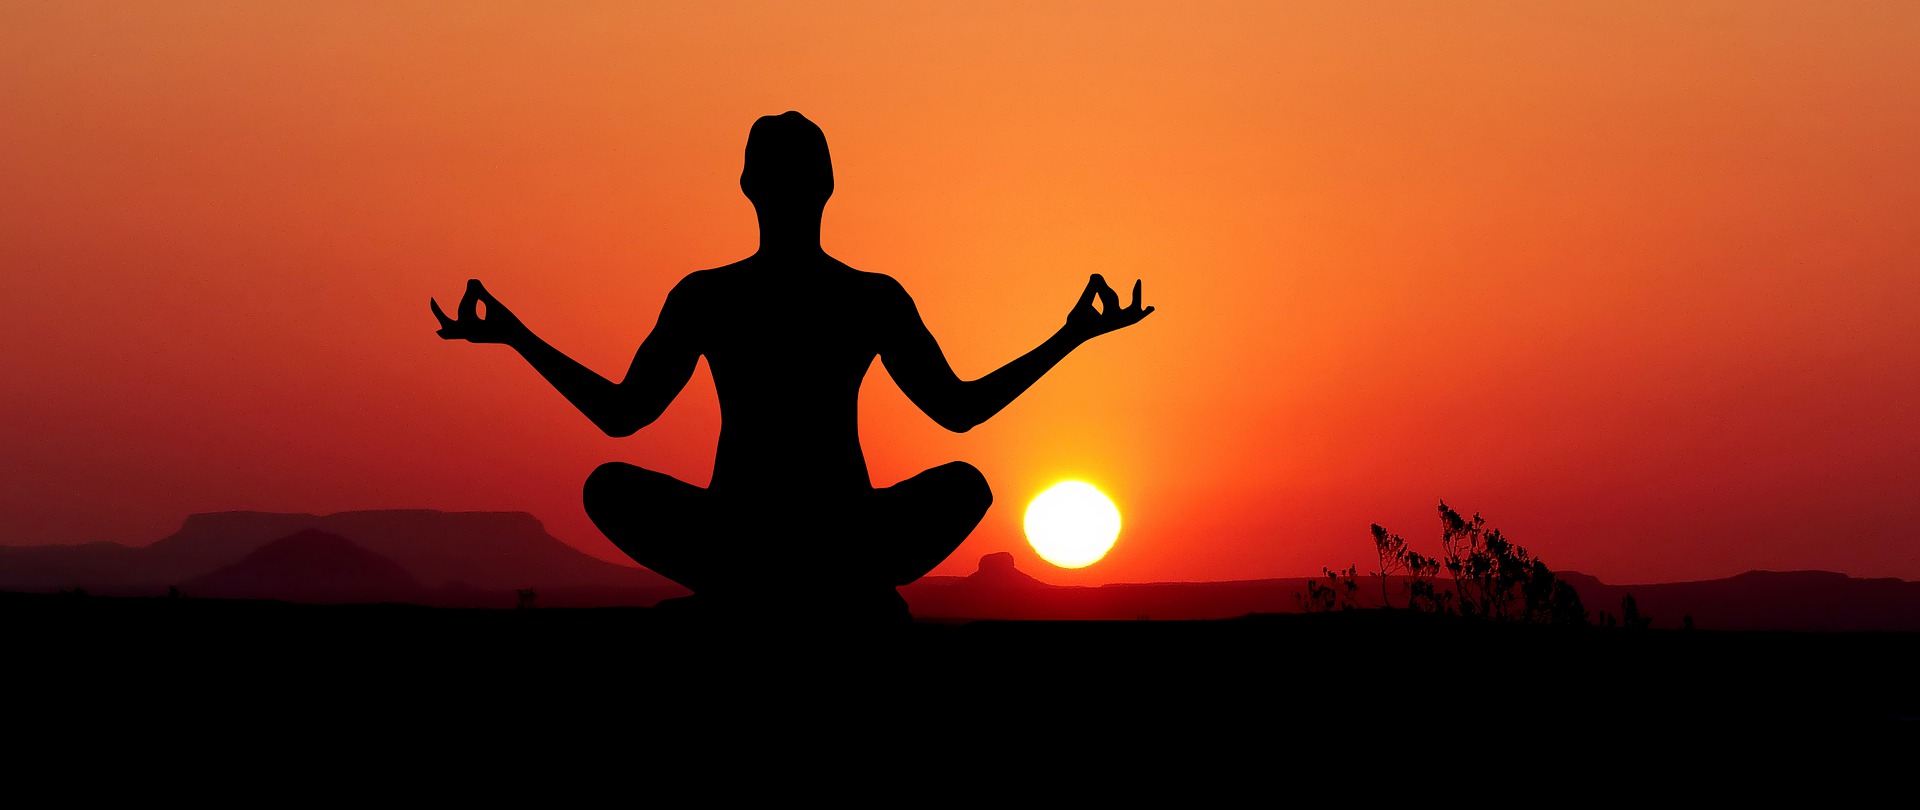 Séance d’essai Yoga-méditation Kundalini à 10$! | Yoga-méditation Kundalini